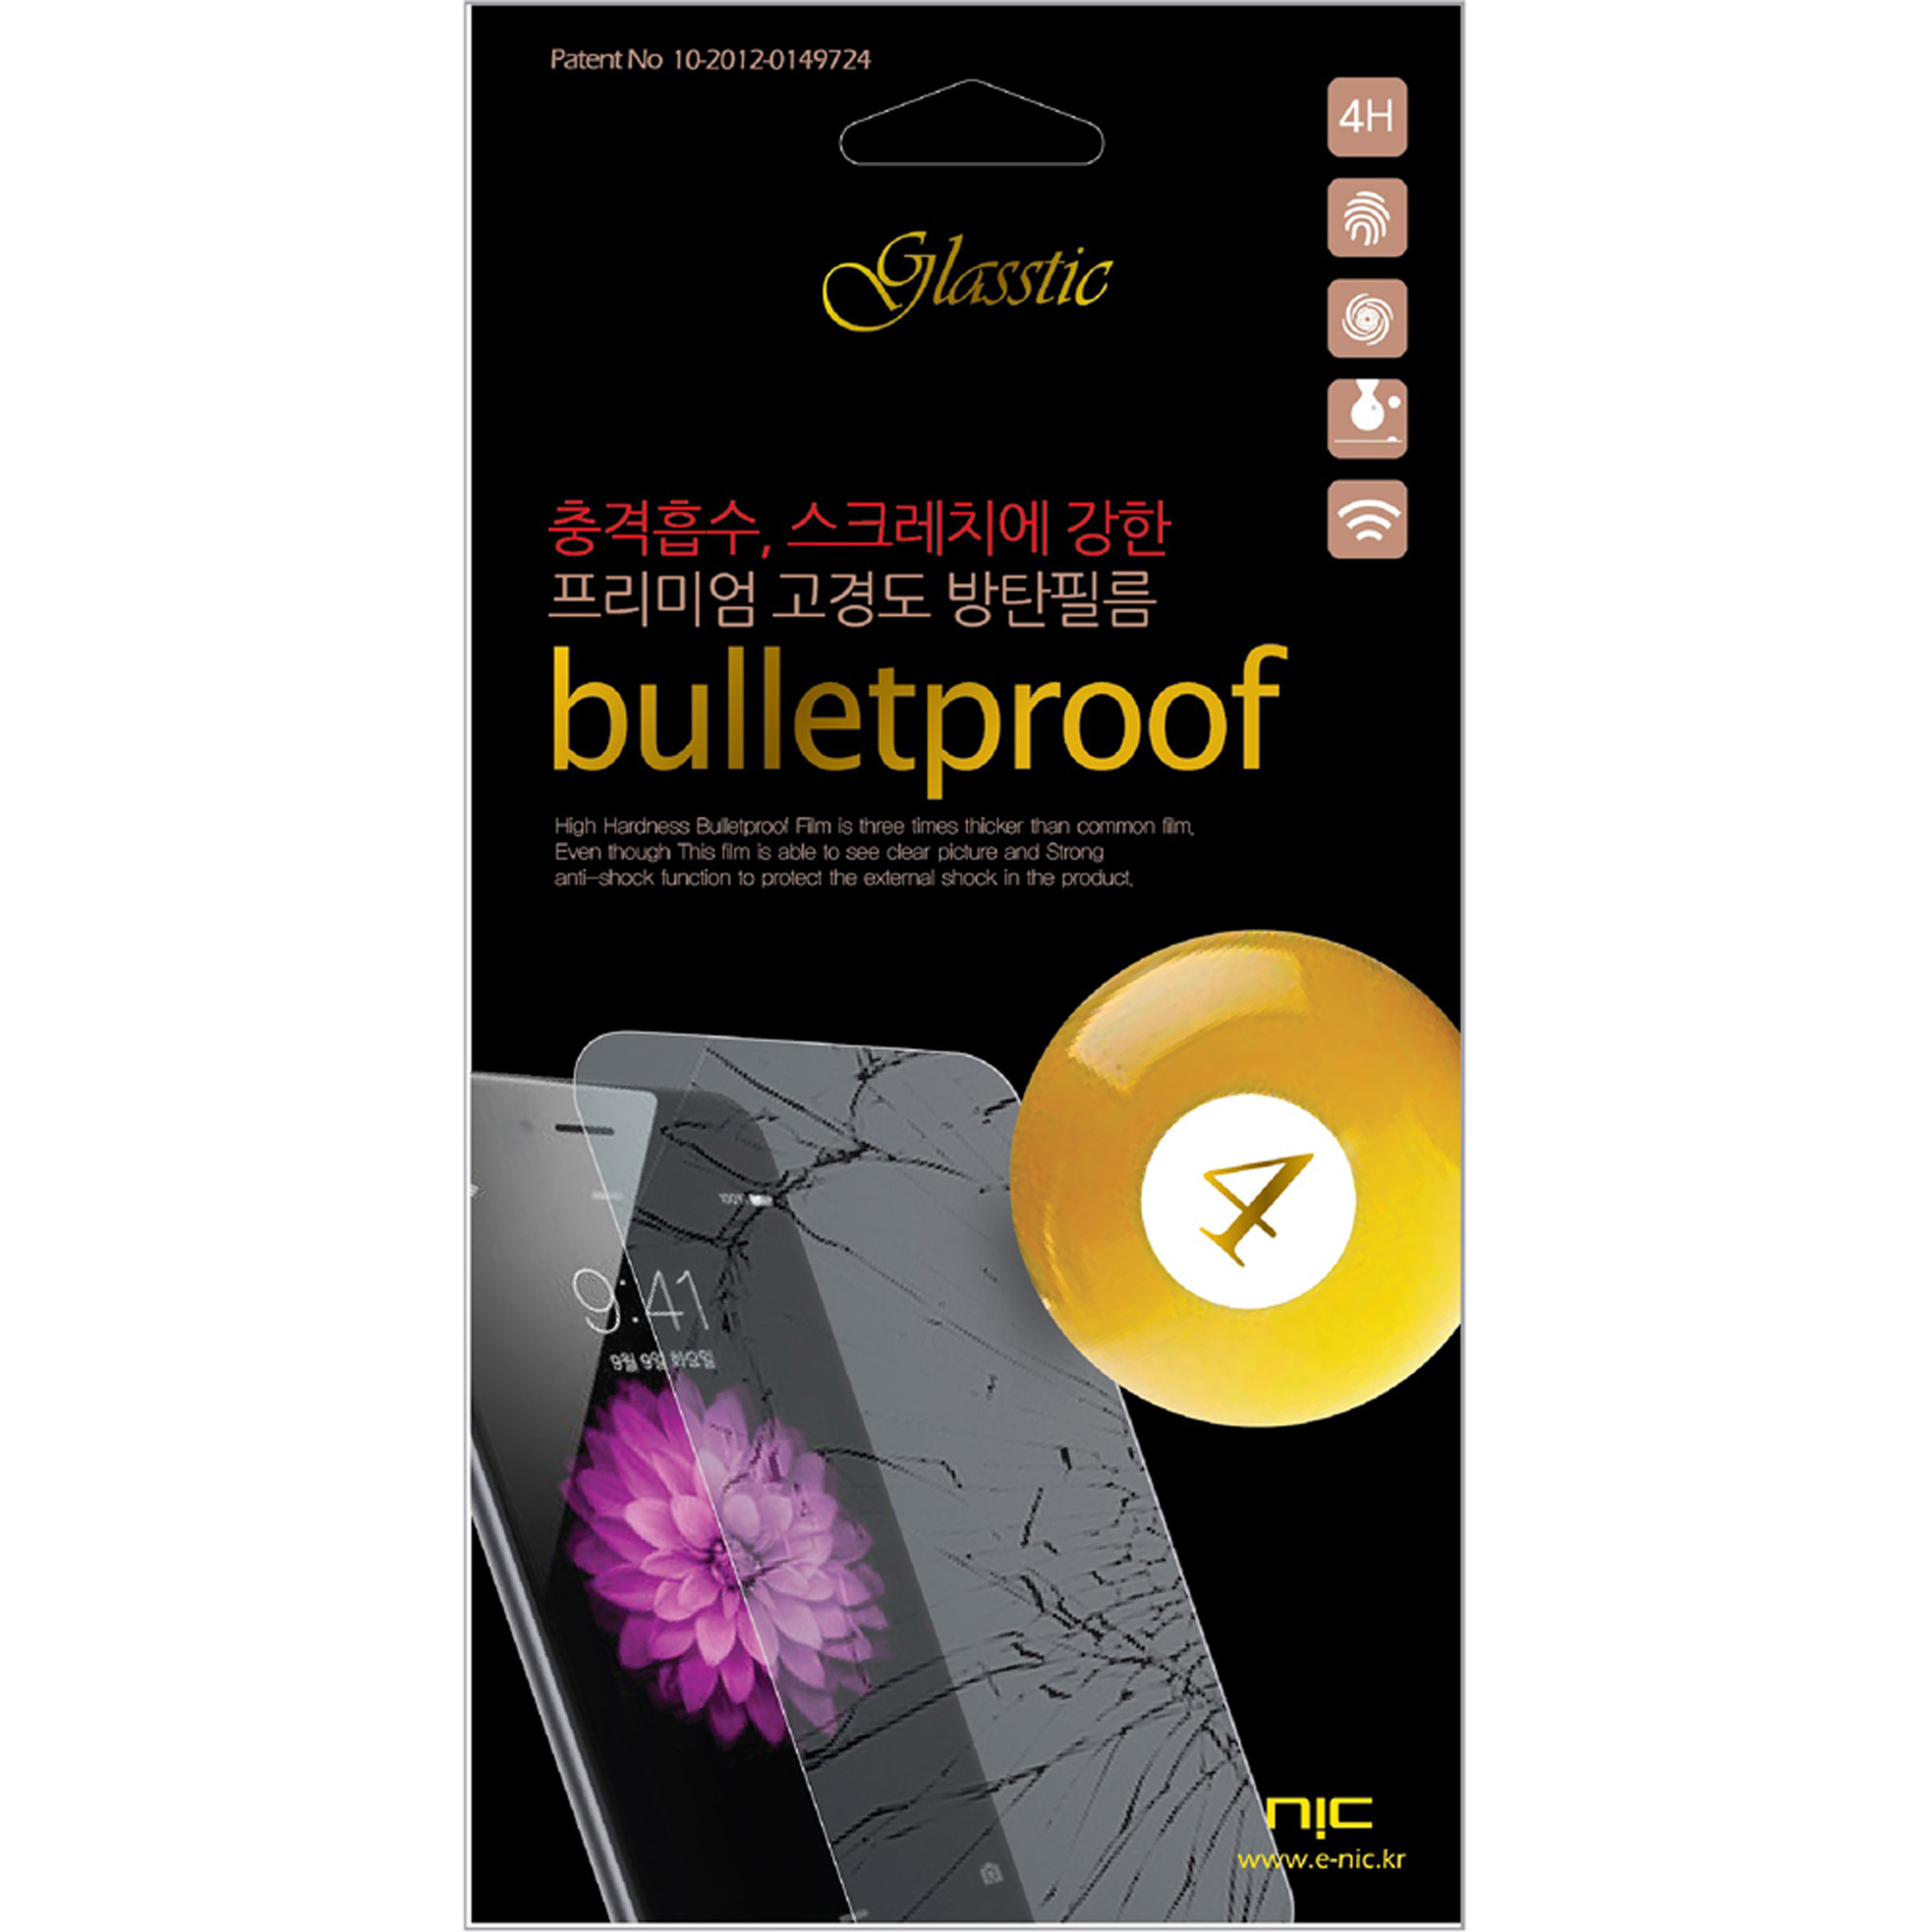 NIC Glasstic 4H Hardened Bulletproof Screen Protector Film for Apple iPhone 5SE/5s/5 - image 2 of 2